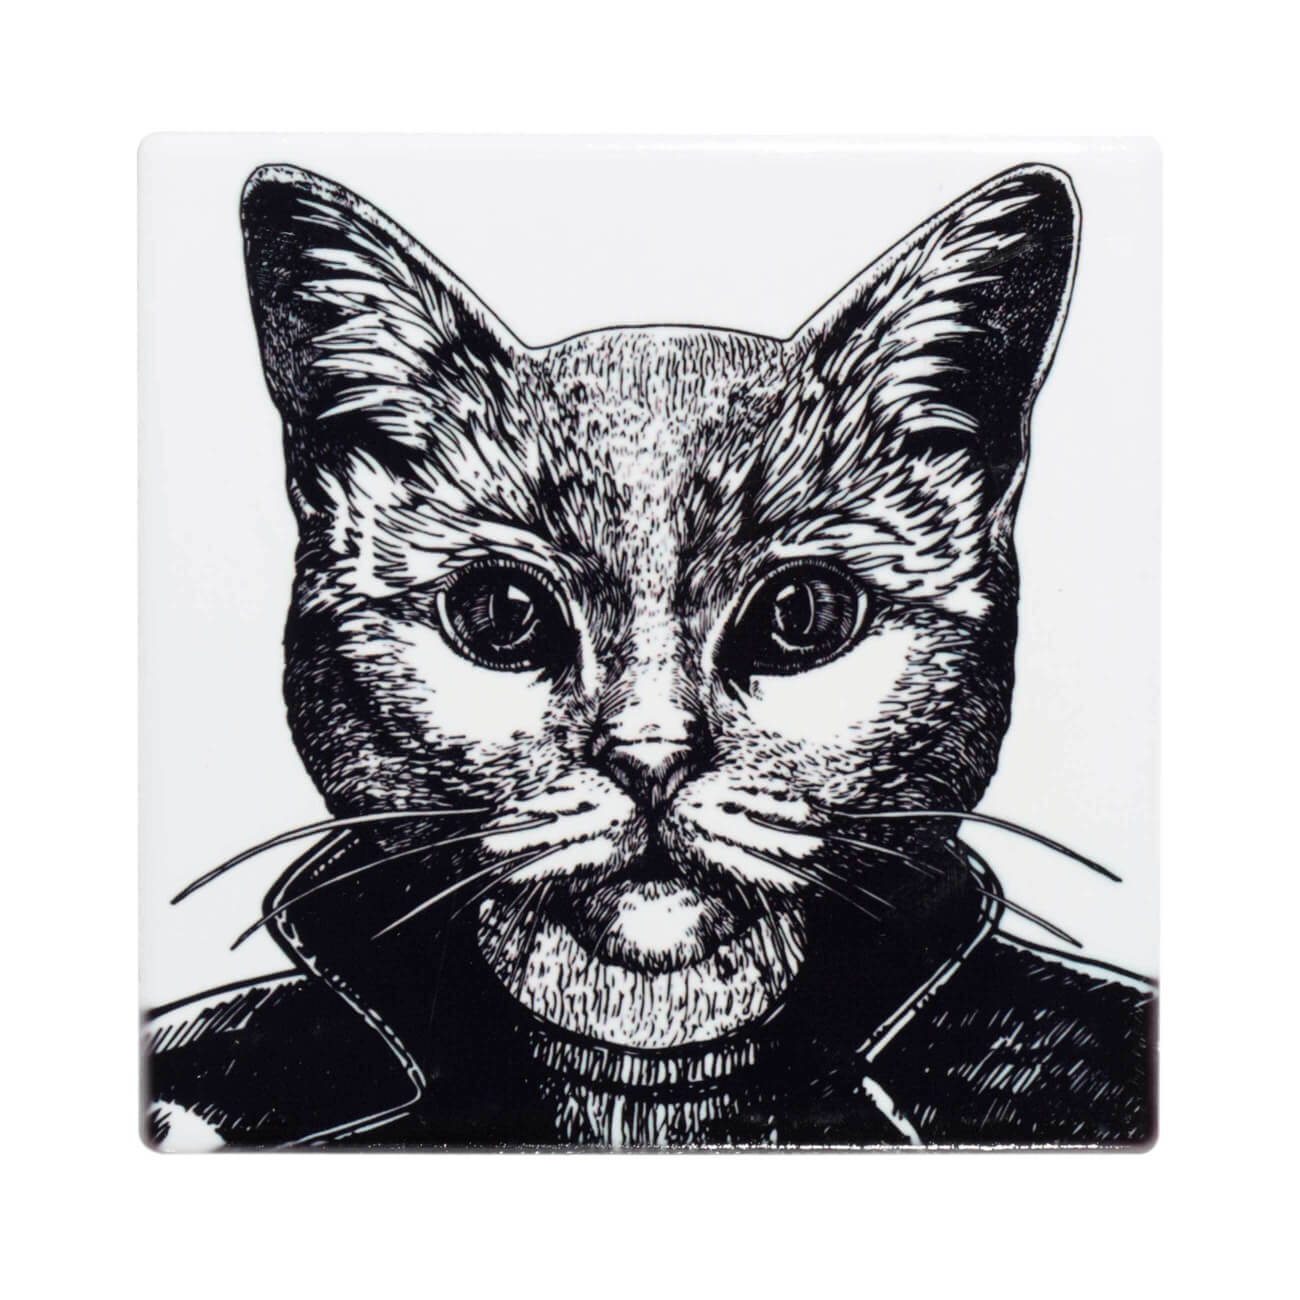 Mug stand, 11x11 cm, ceramic / cork, square, Cat in leather jacket, Brutal style изображение № 1